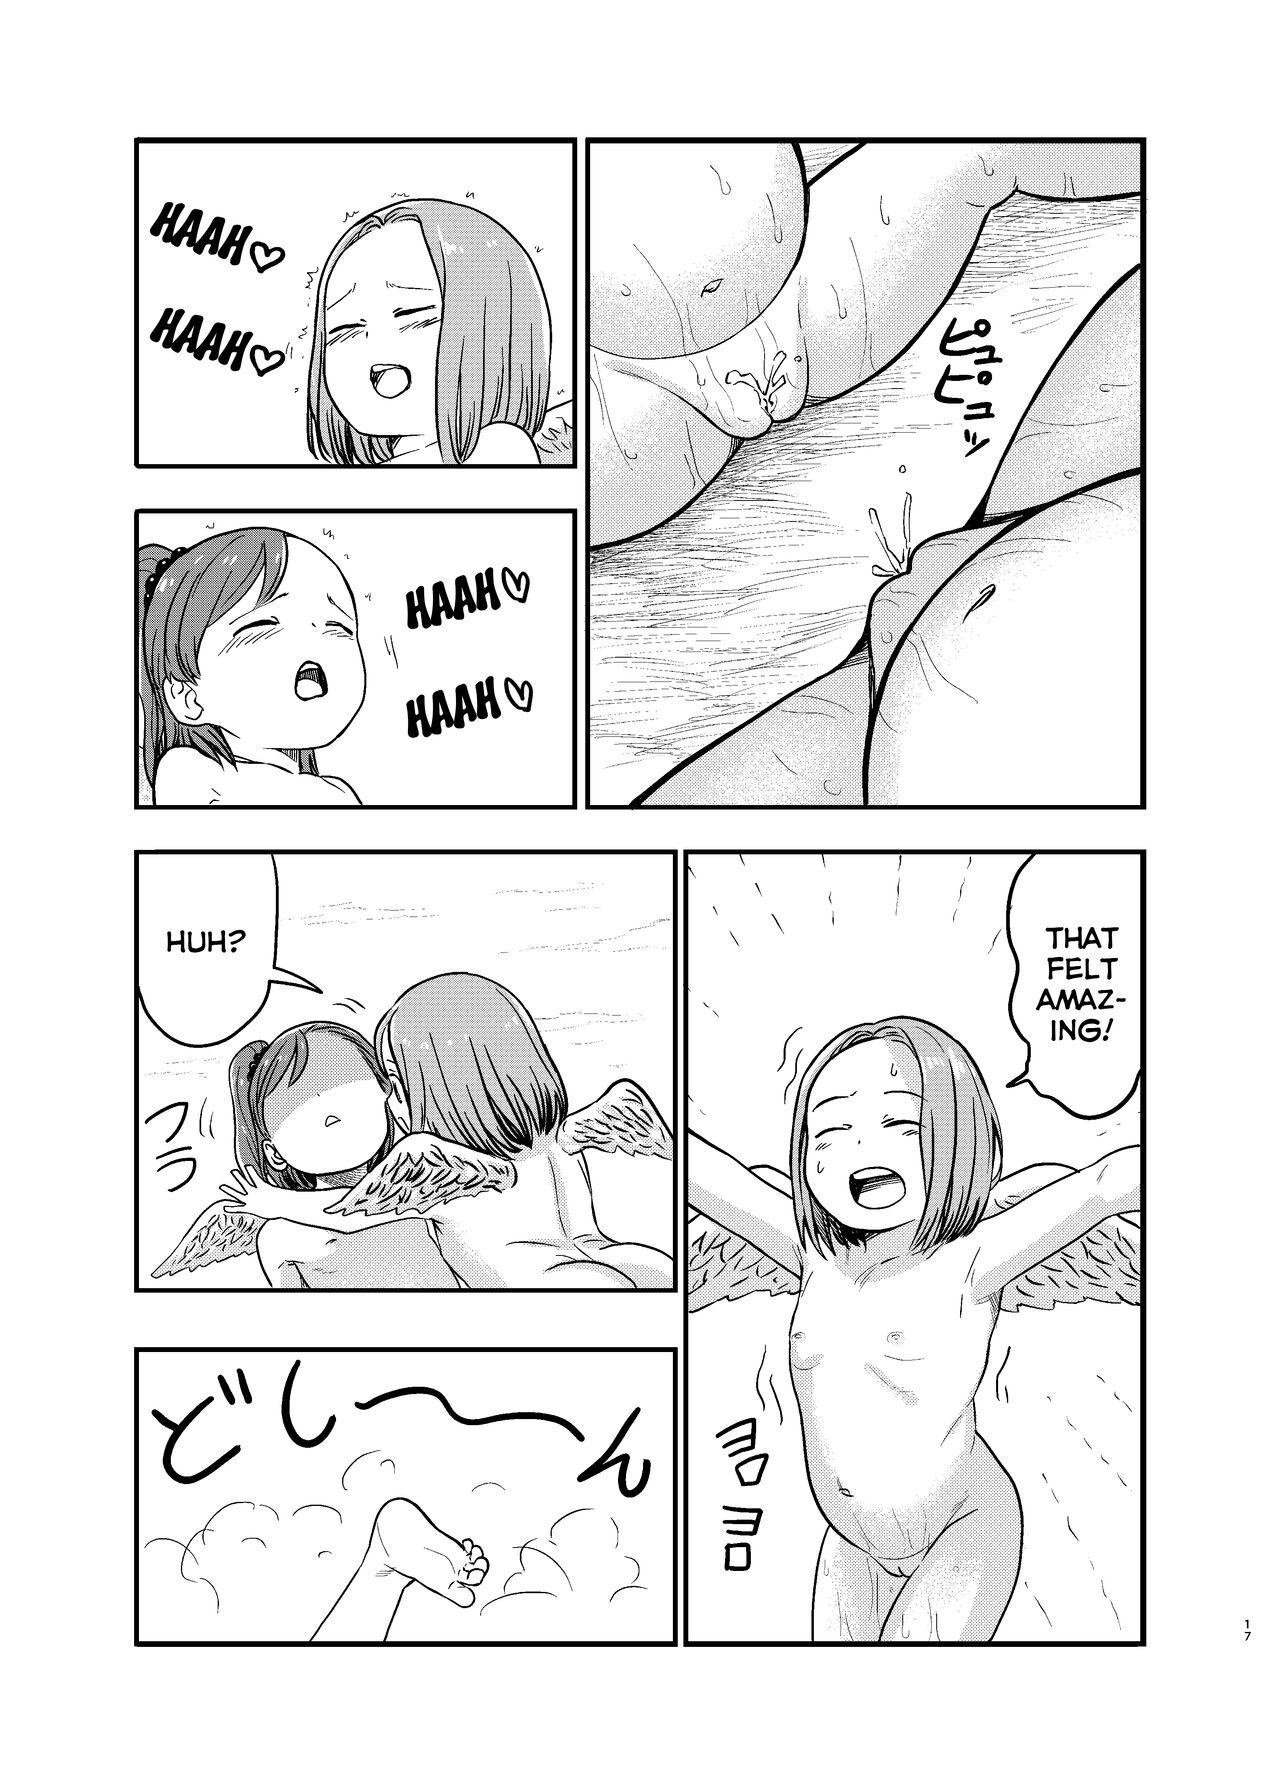 Yuri Tenshi no Futari ga Ecchi na Koto o Suru Manga | A Manga Where Two Lesbian Angels Do Lewd Things Together 16